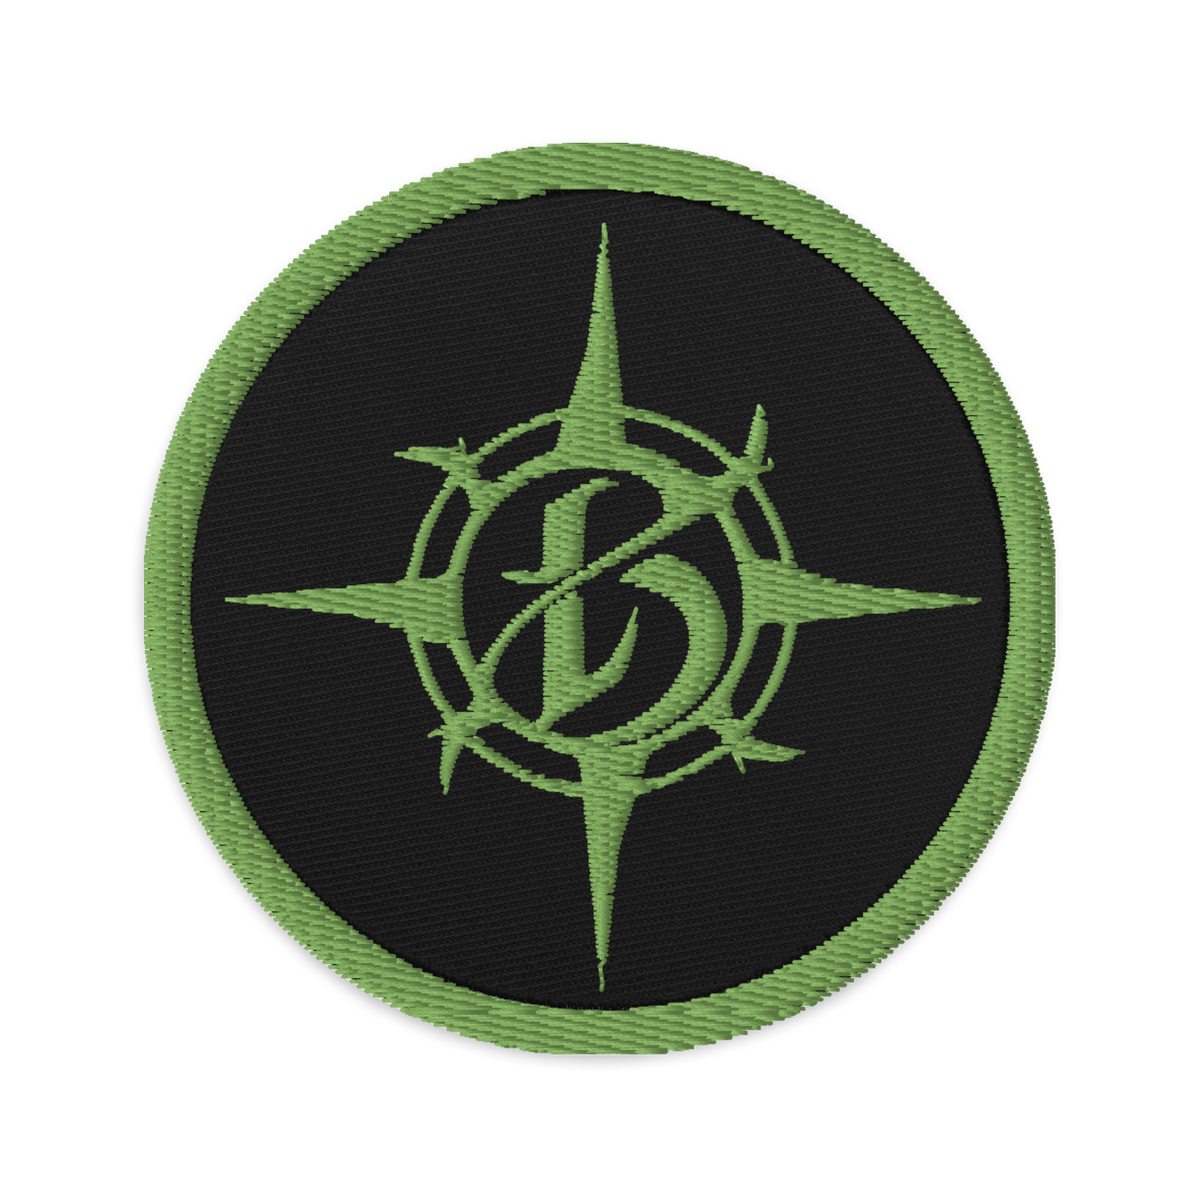 Borealis Compass Logo Embroidered Patch - Kiwi Green